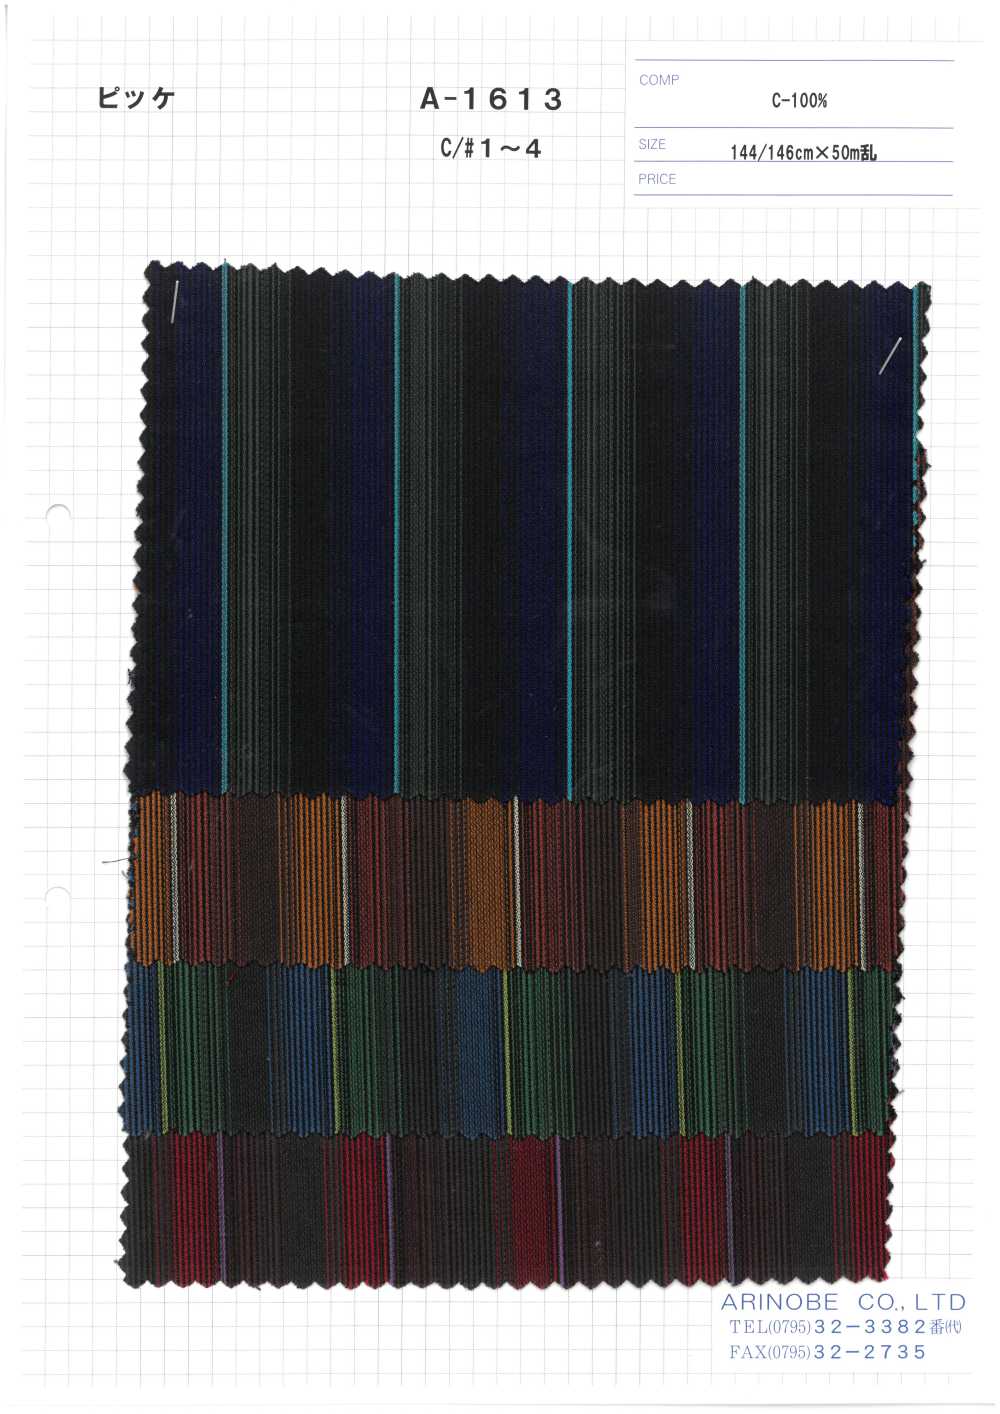 A-1613 Baumwoll-Piqué[Textilgewebe] ARINOBE CO., LTD.